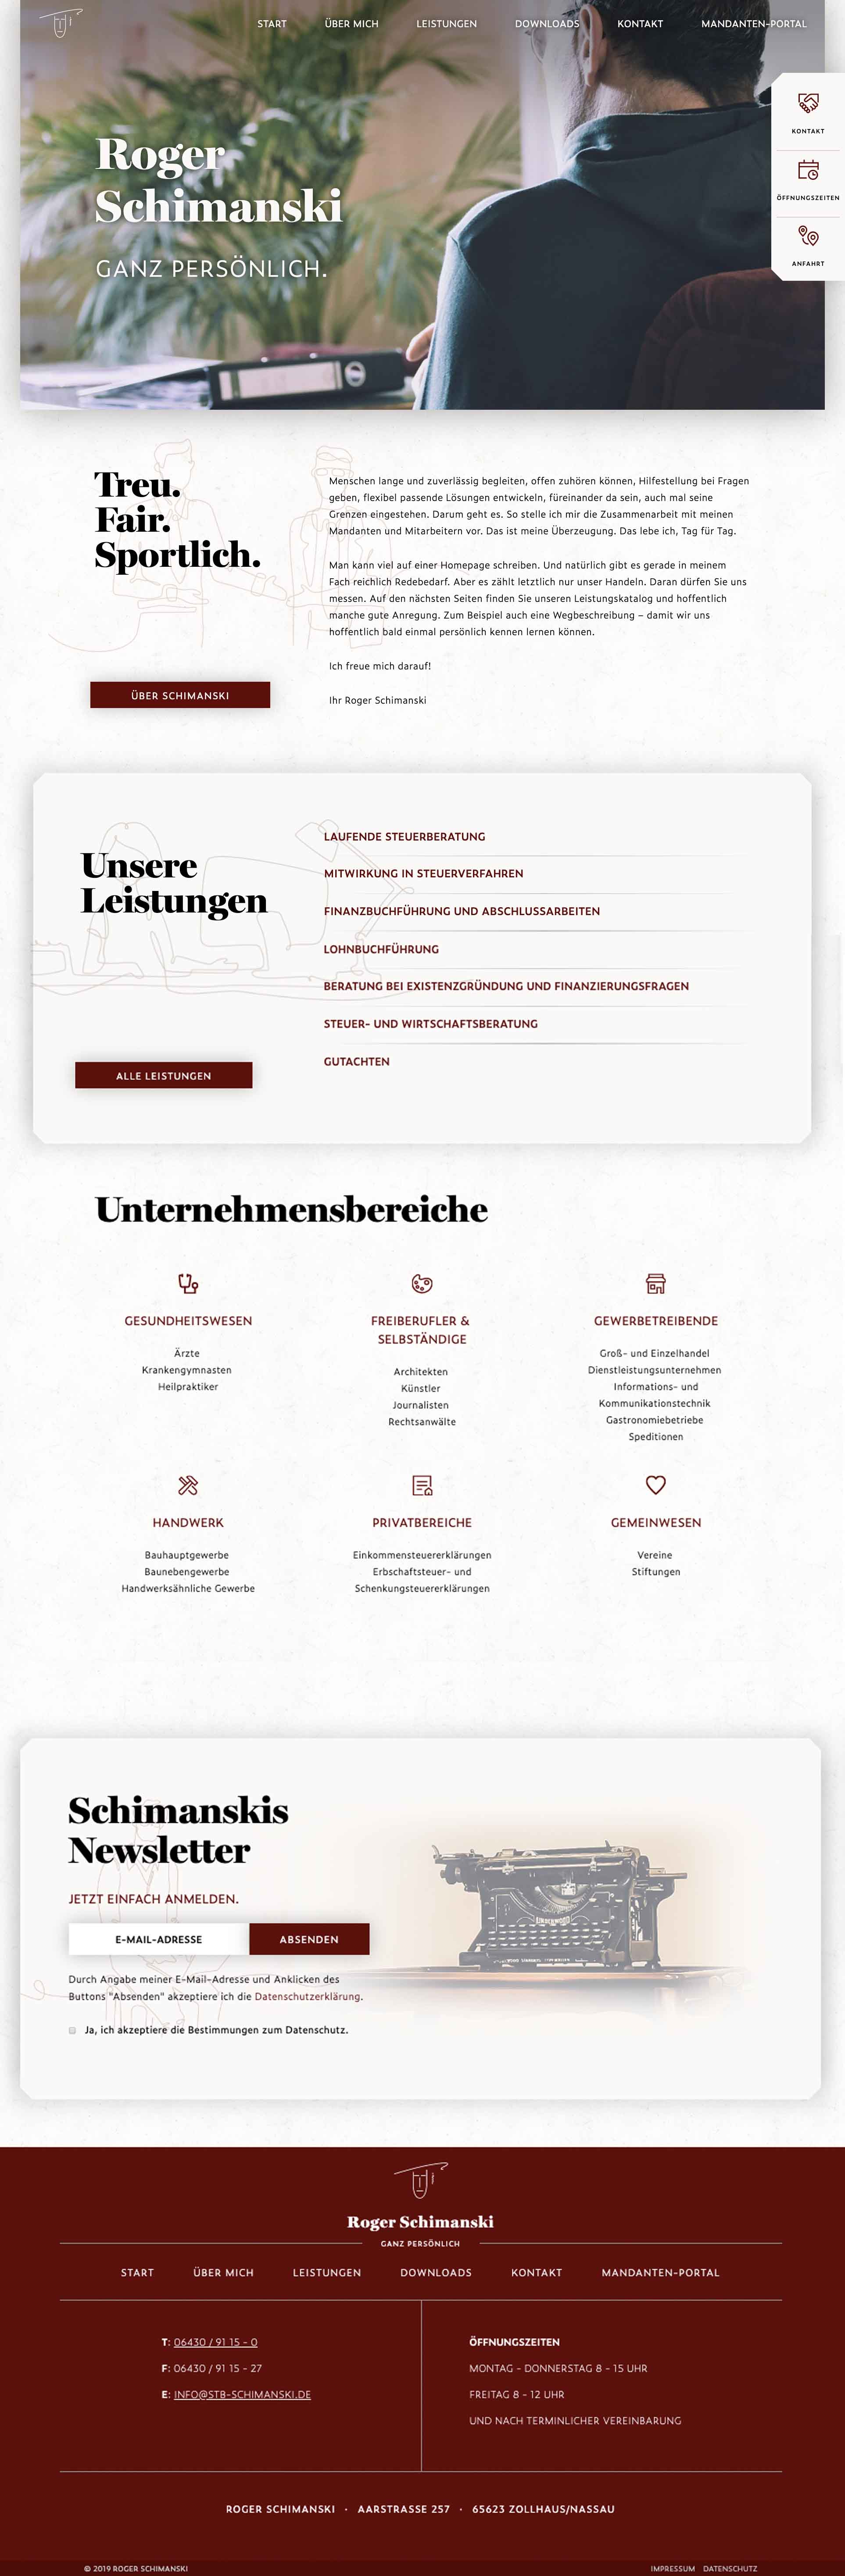 mister bk! | Referenz: Steuerbuero Robert Schimanski Website Tablet